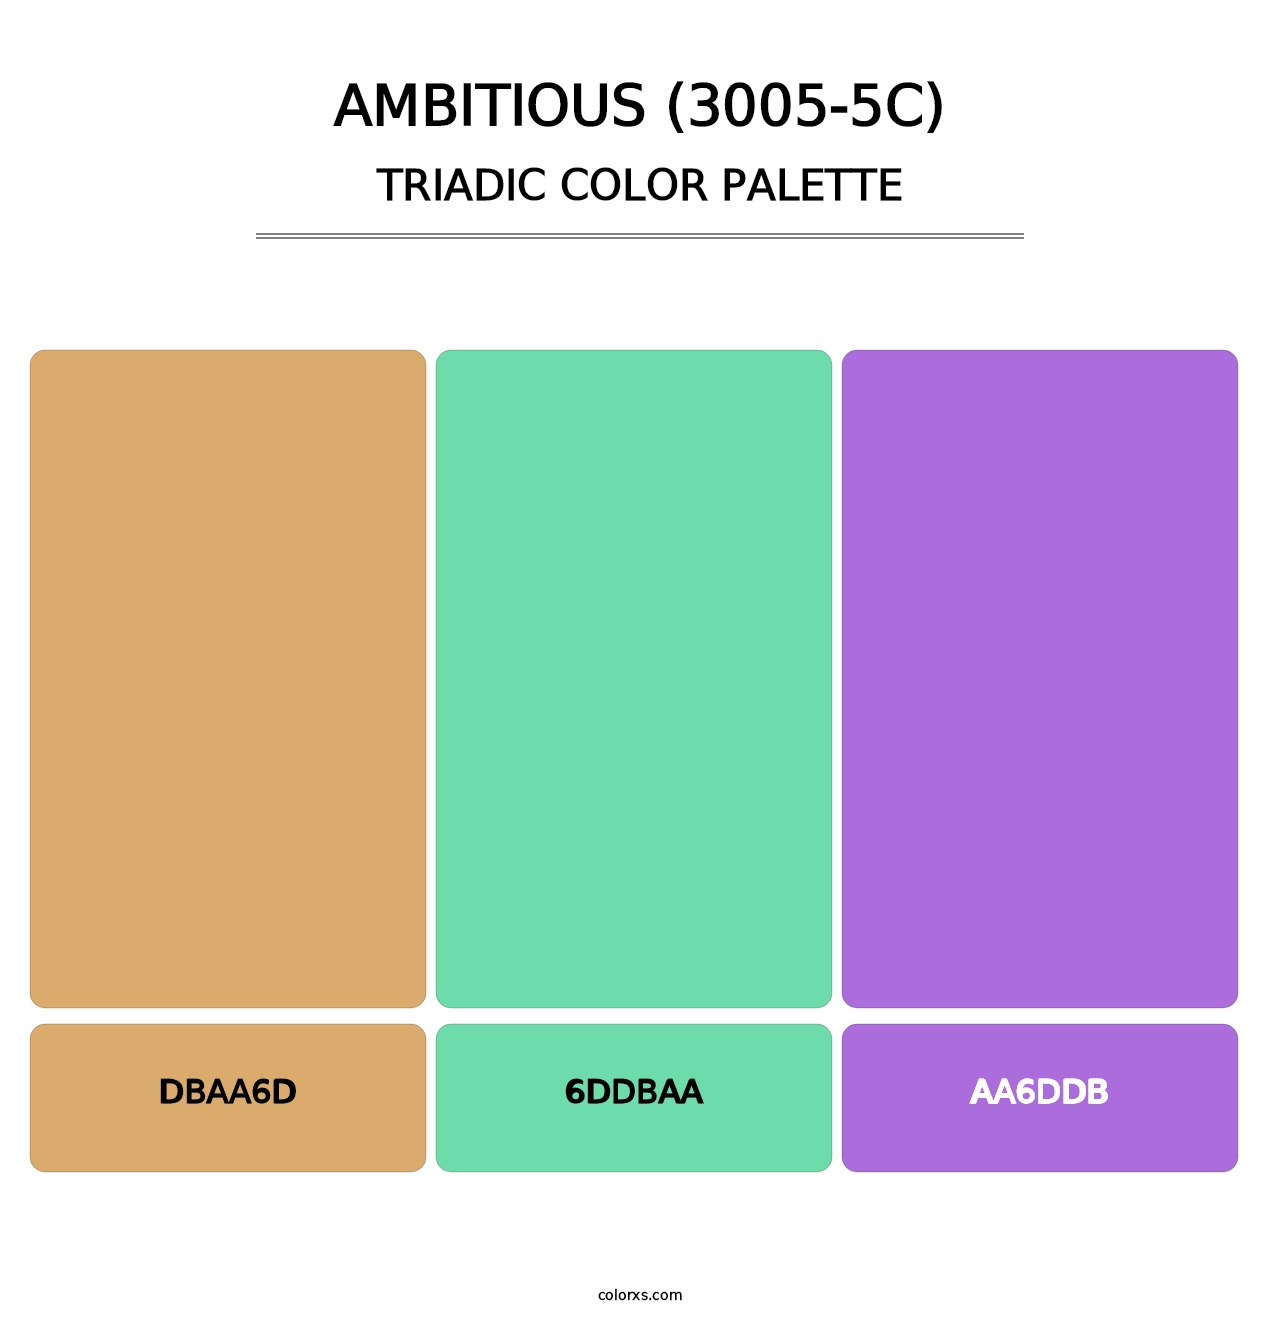 Ambitious (3005-5C) - Triadic Color Palette